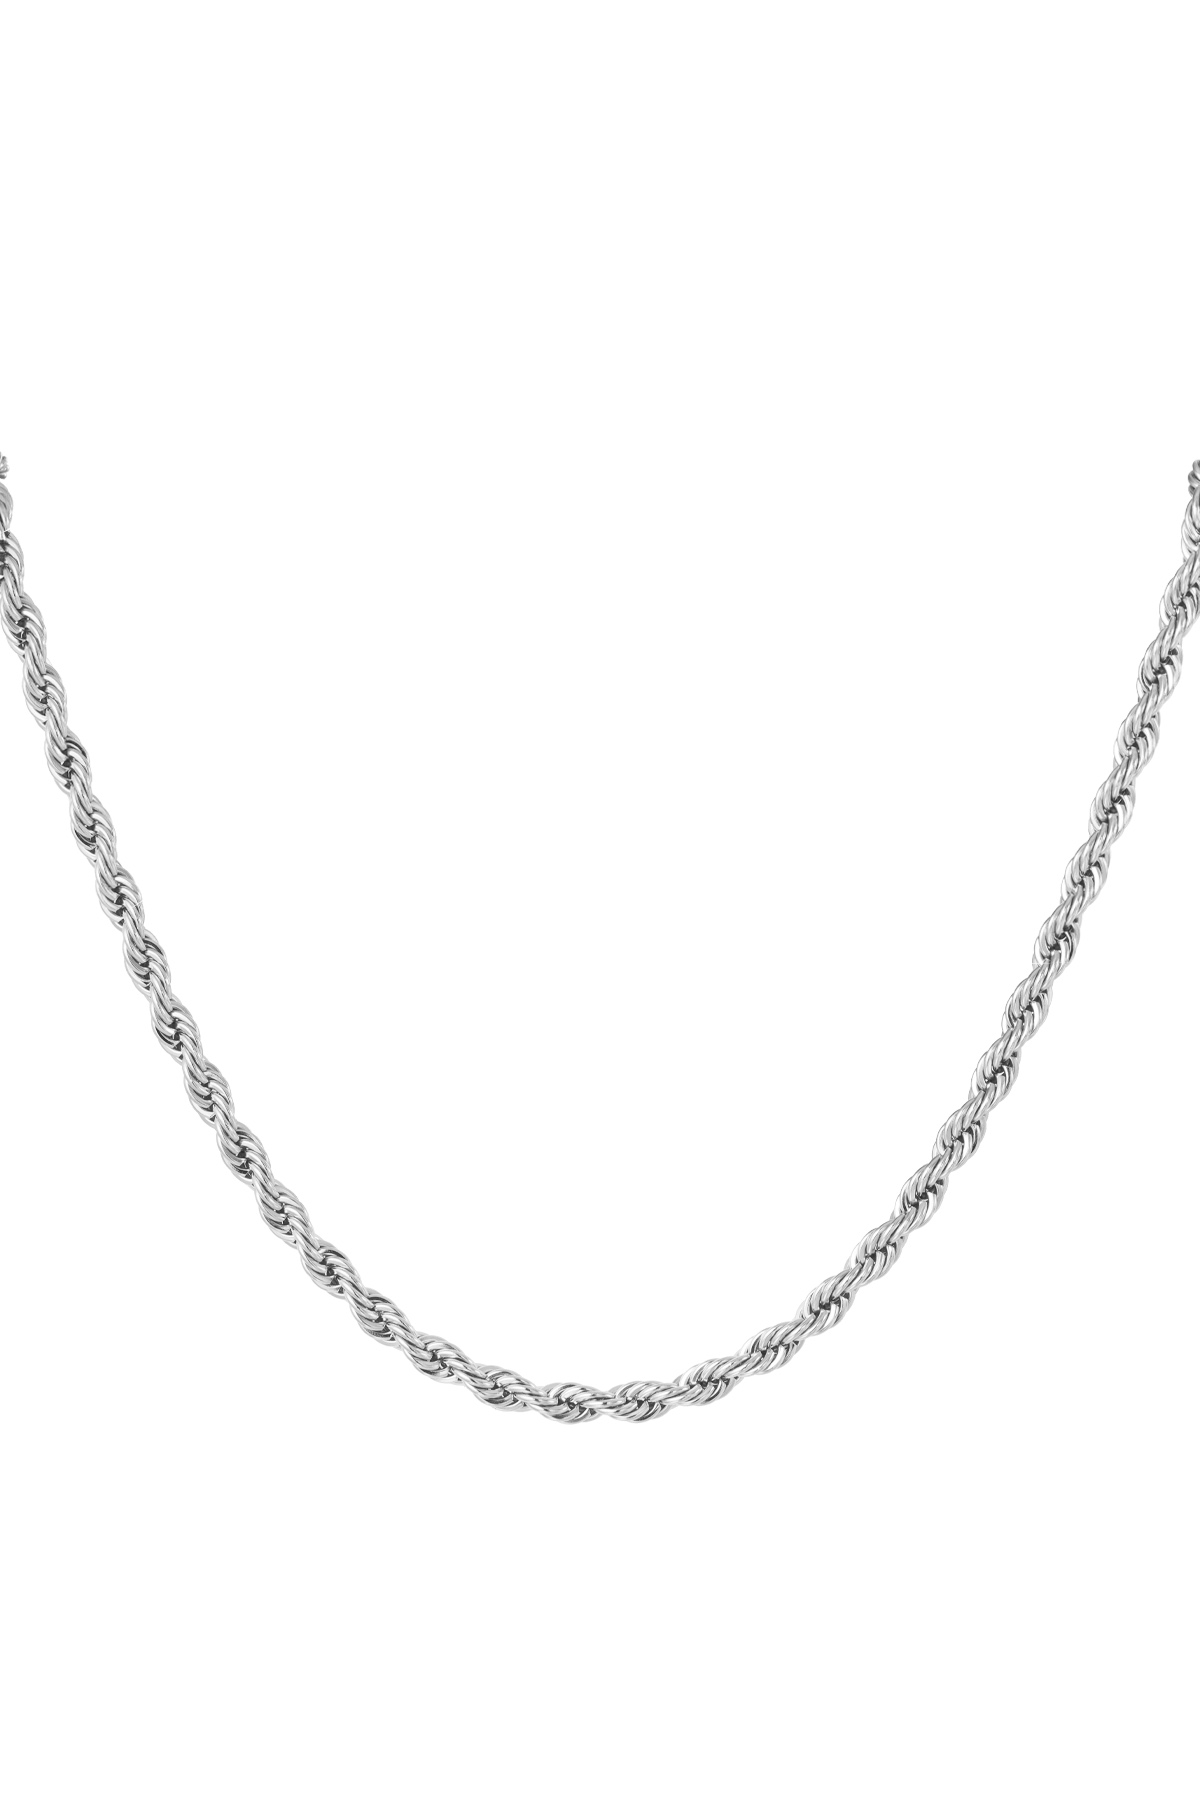 Unisex-Halskette dick gedreht 60cm - Silber - 4,5MM h5 